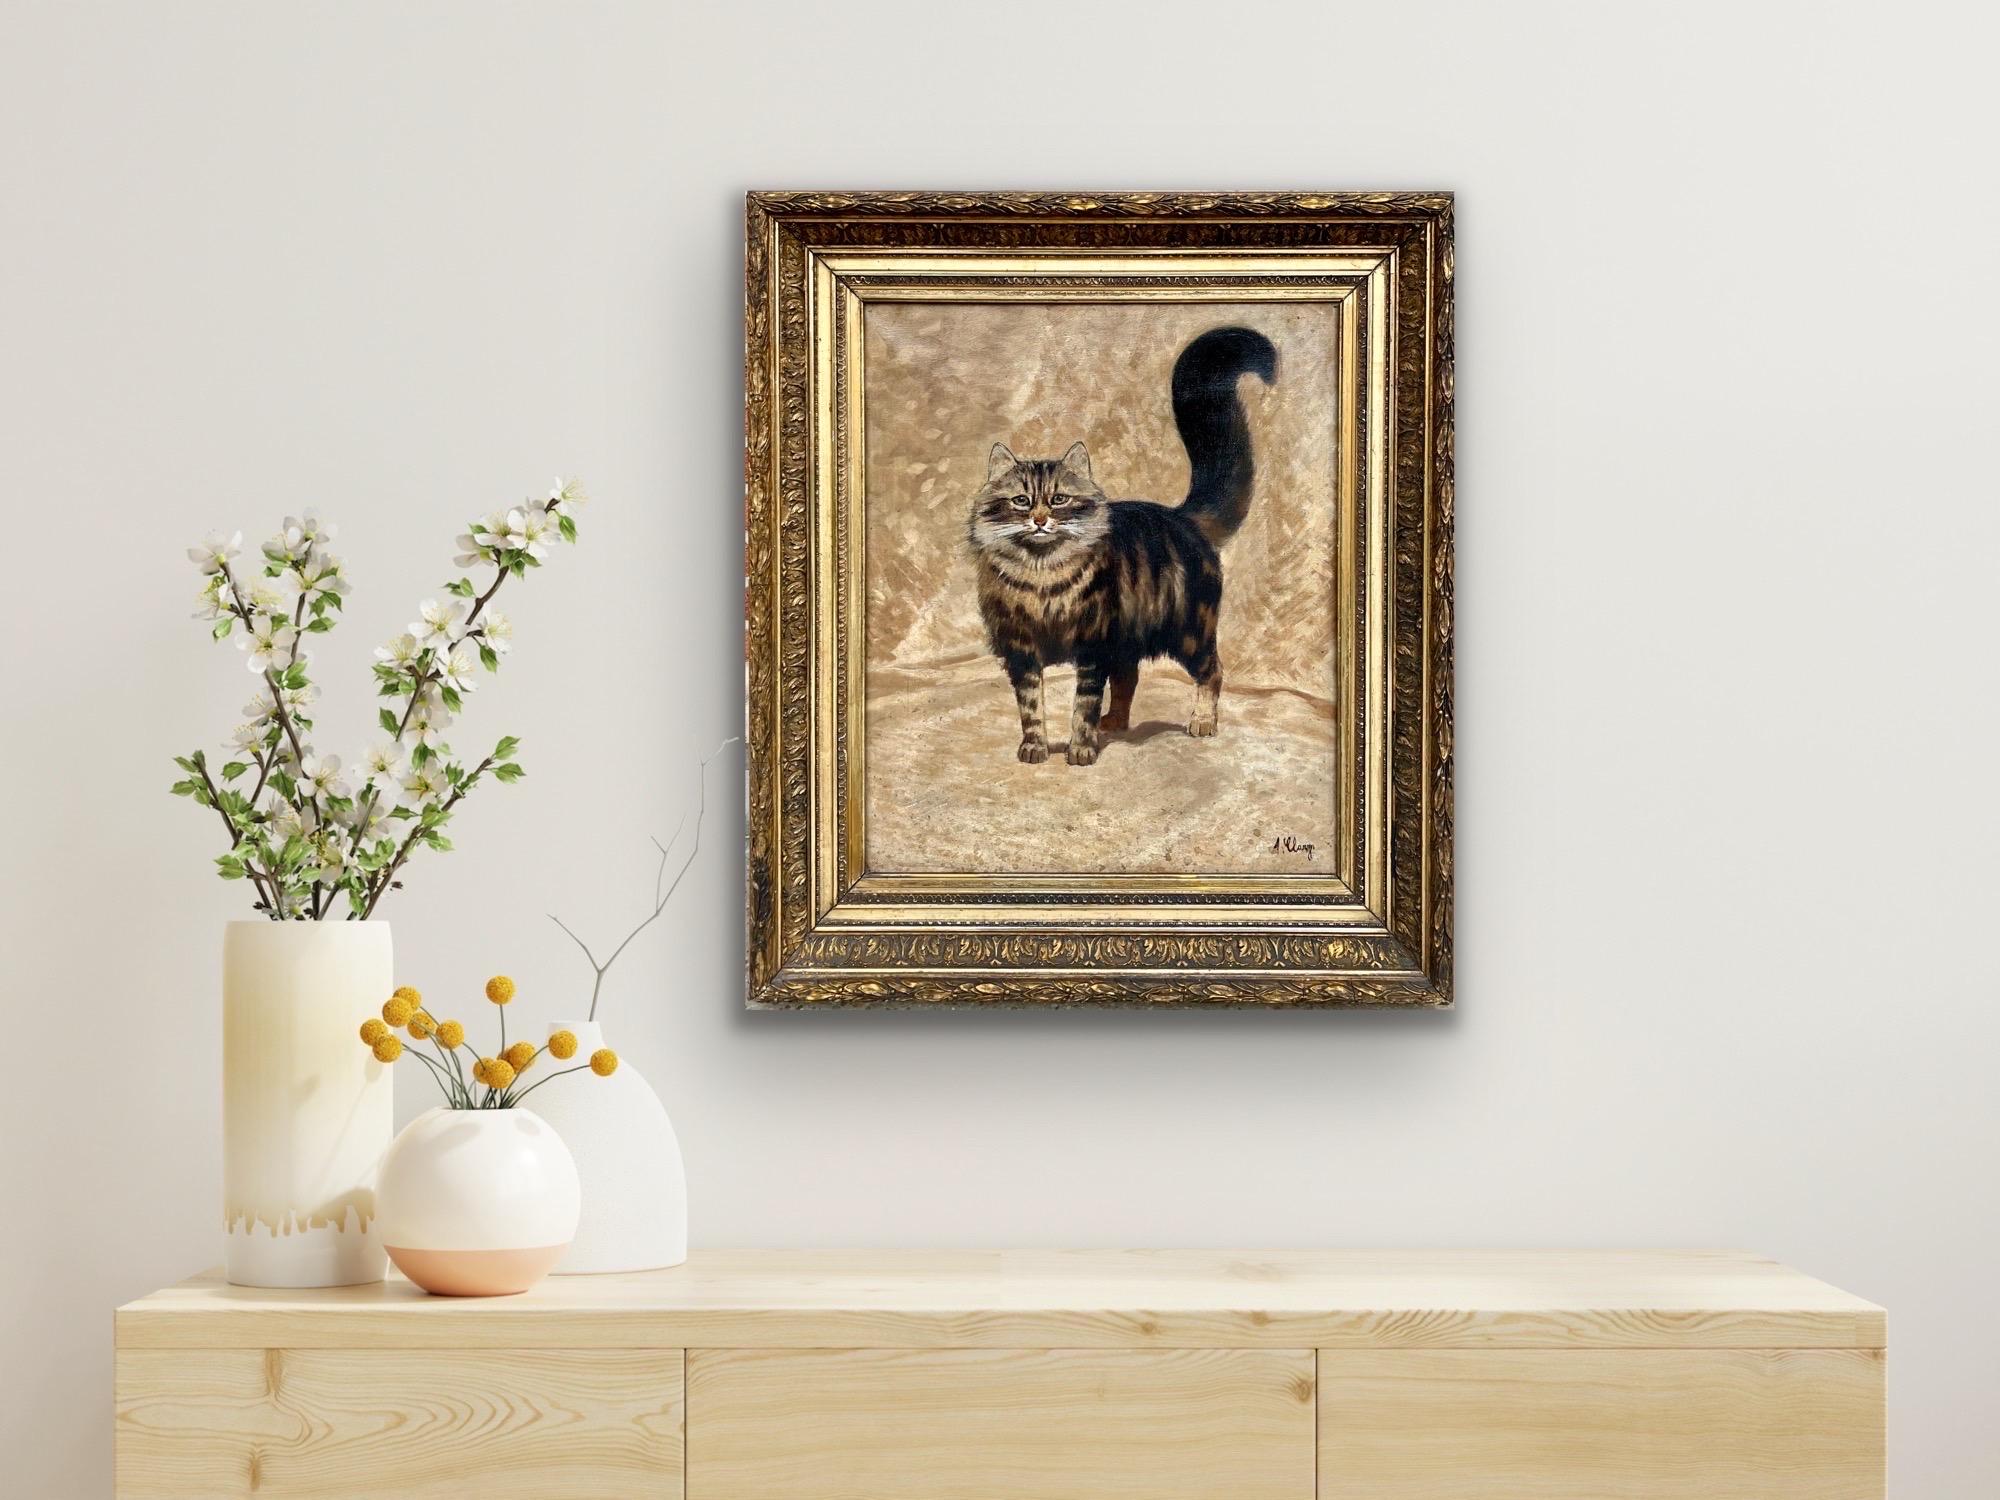 19th century cat portrait painting - 